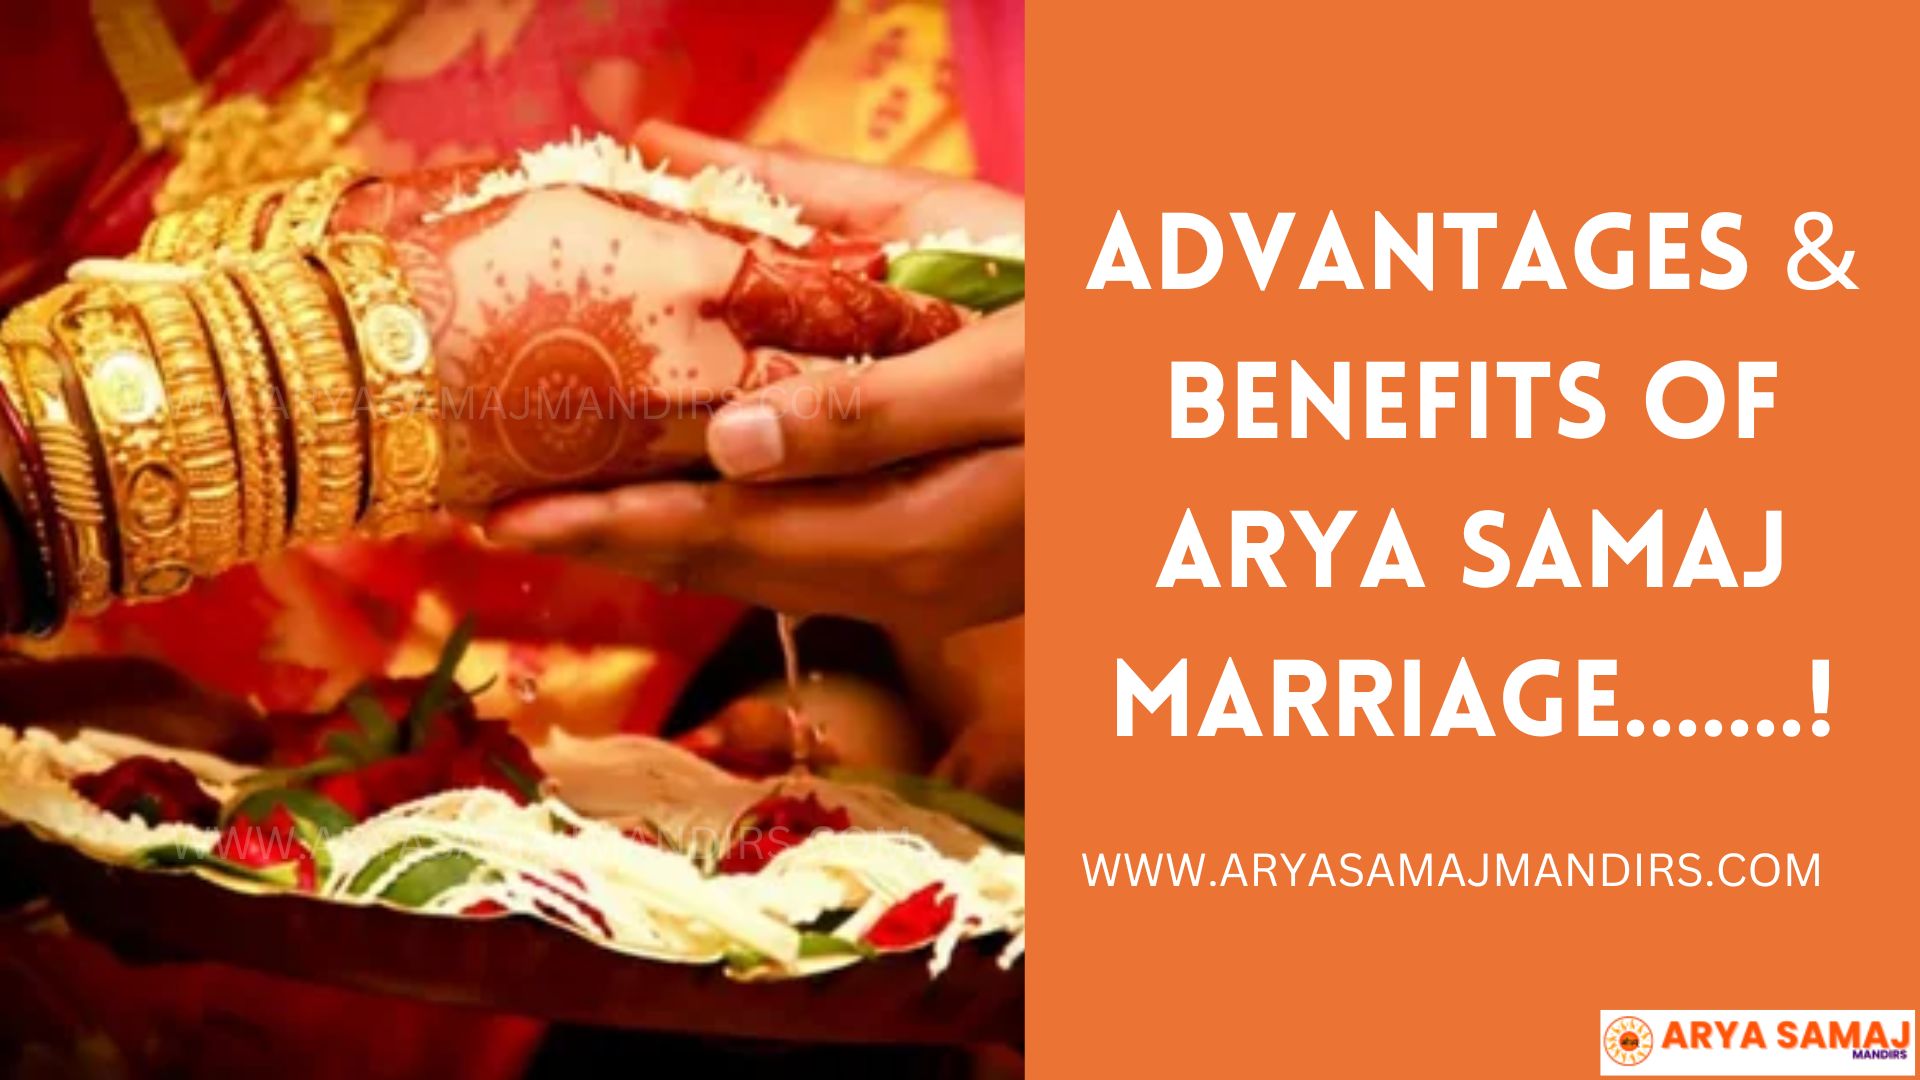 Advantages & Benefits of Arya Samaj Marriage